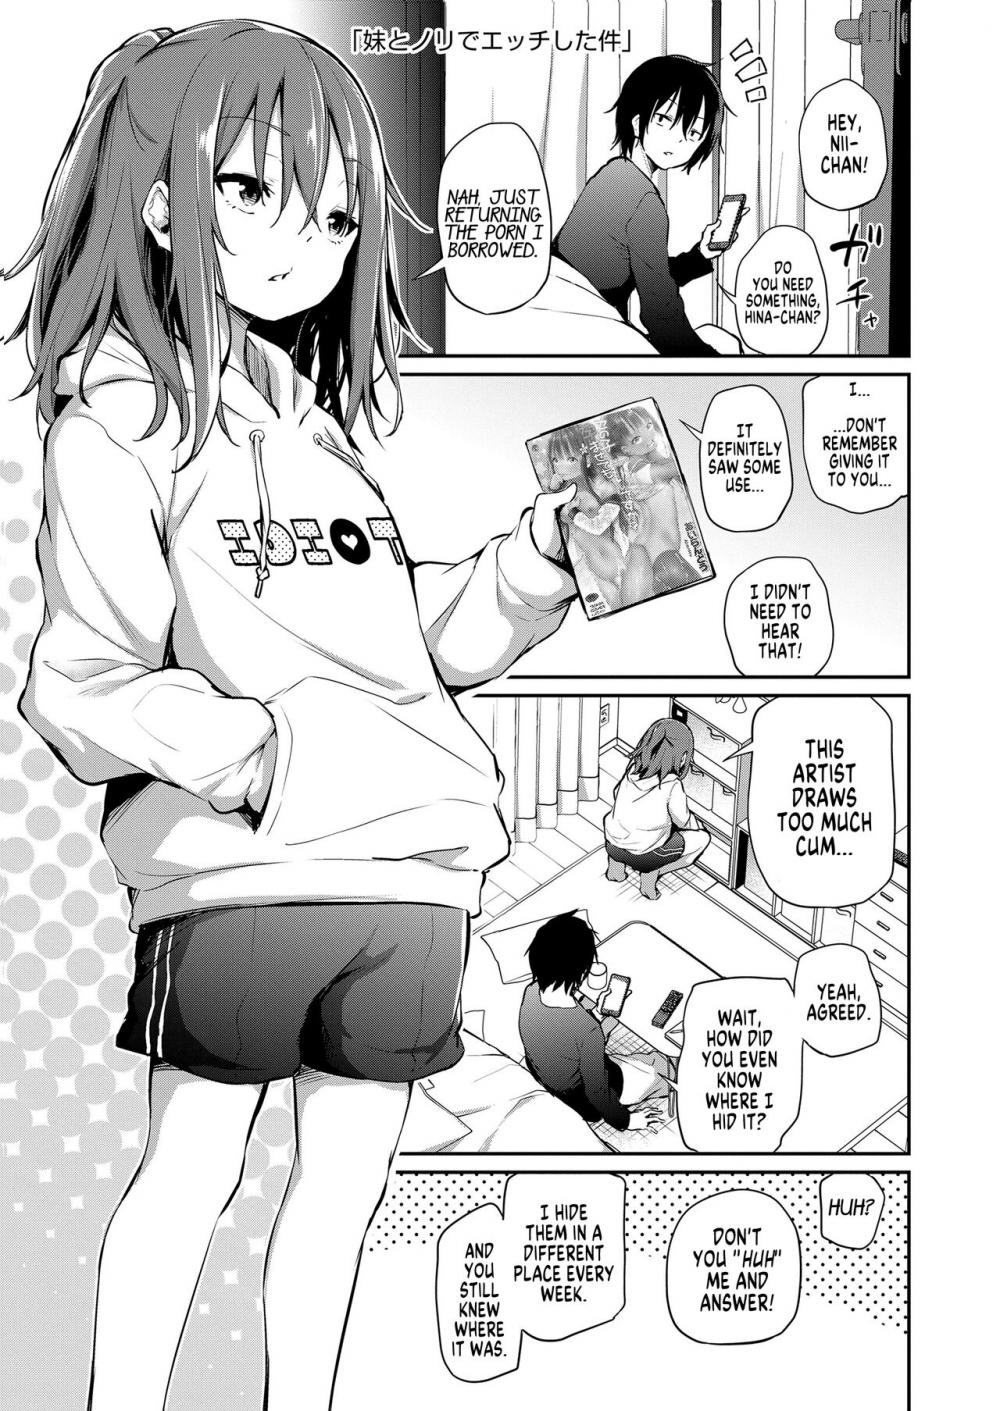 Hentai Manga Comic-How I Got Too Carried Away and Fucked My Little Sister-Read-1